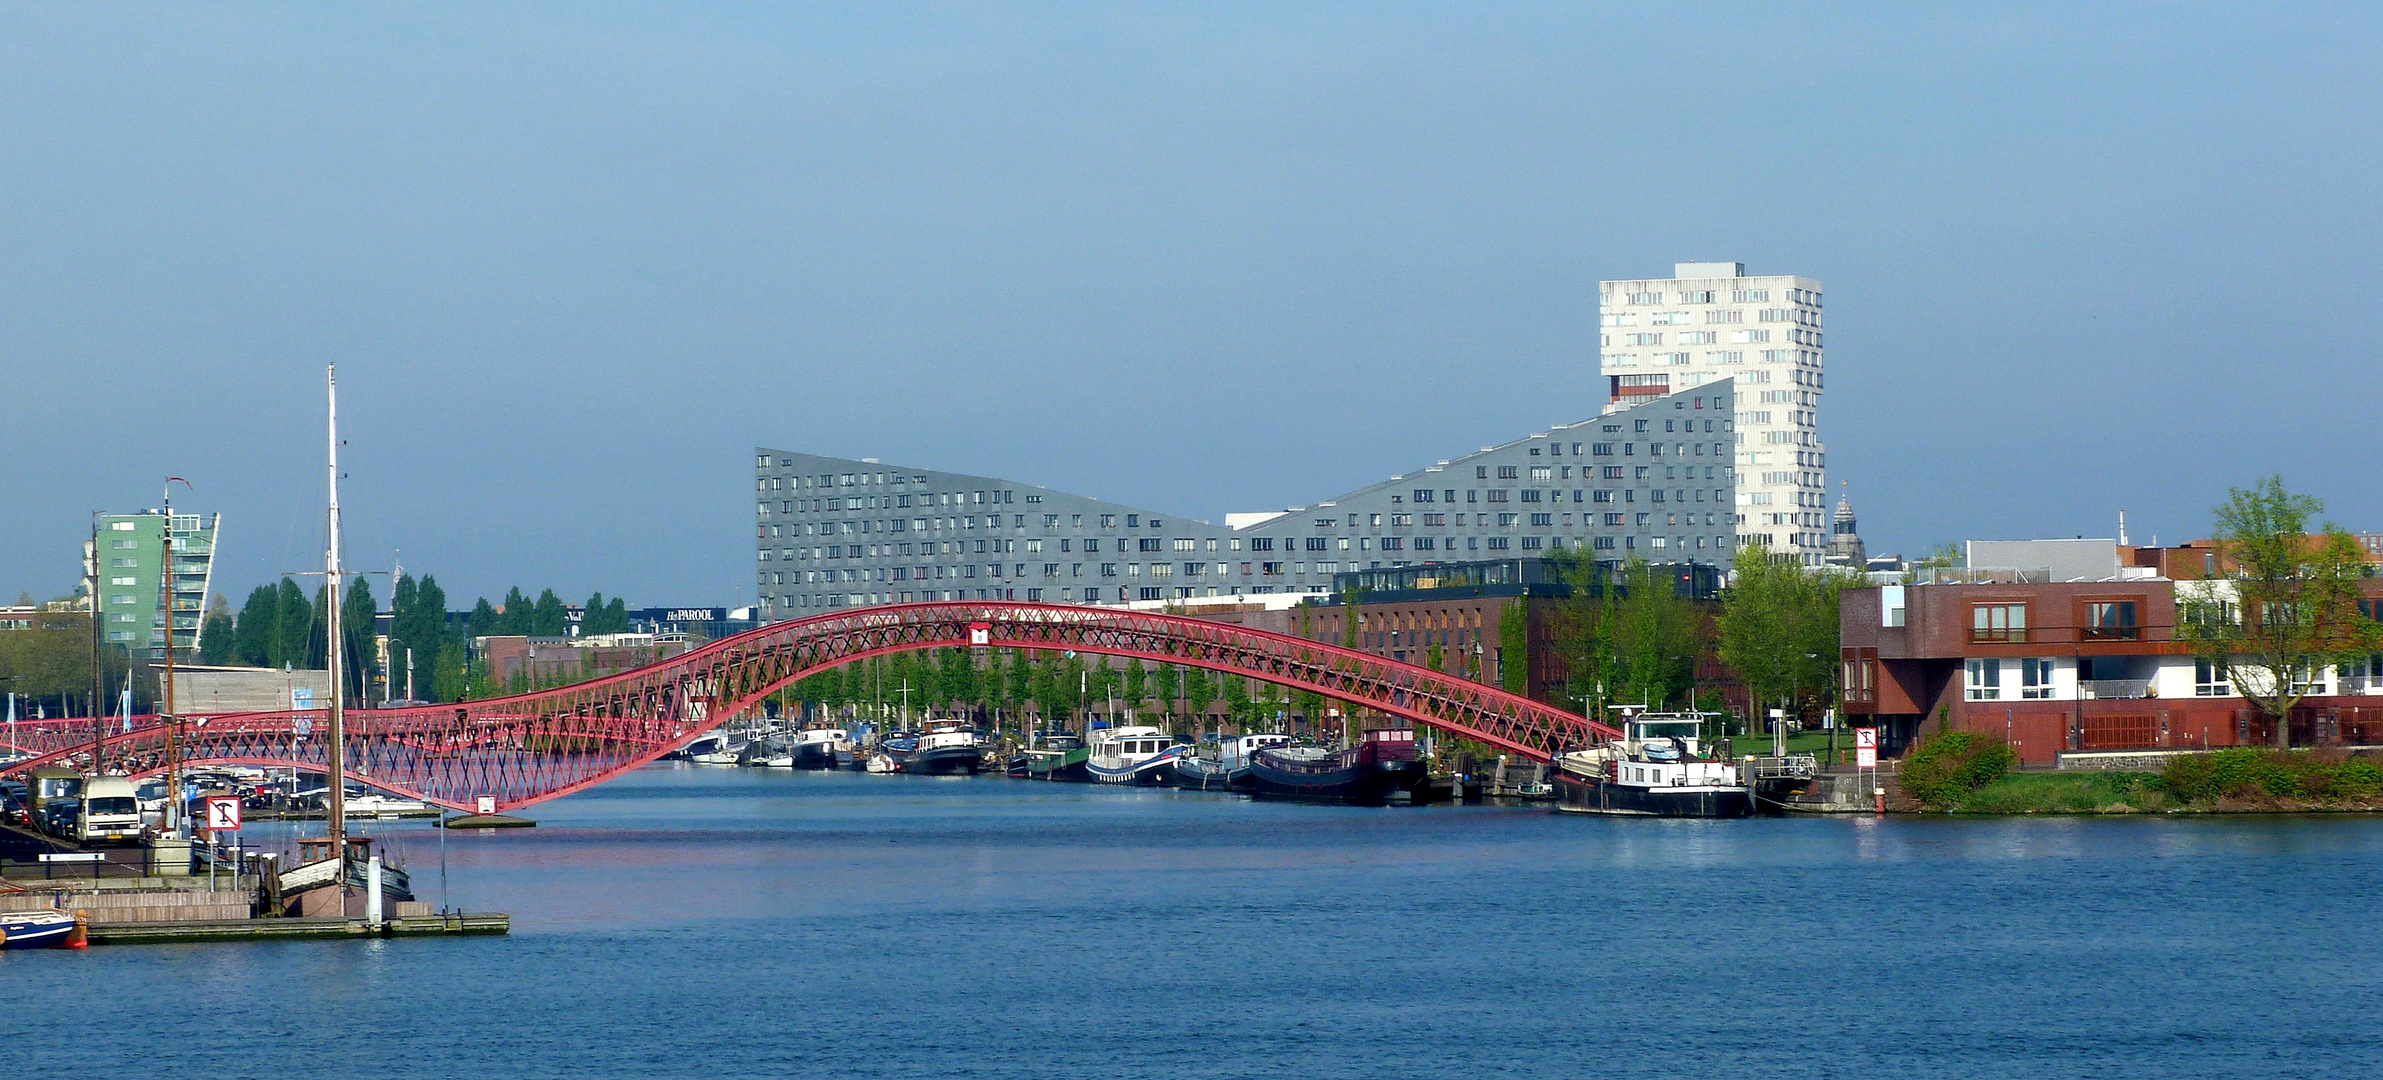 Amsterdam-Oost: Pythonbrug